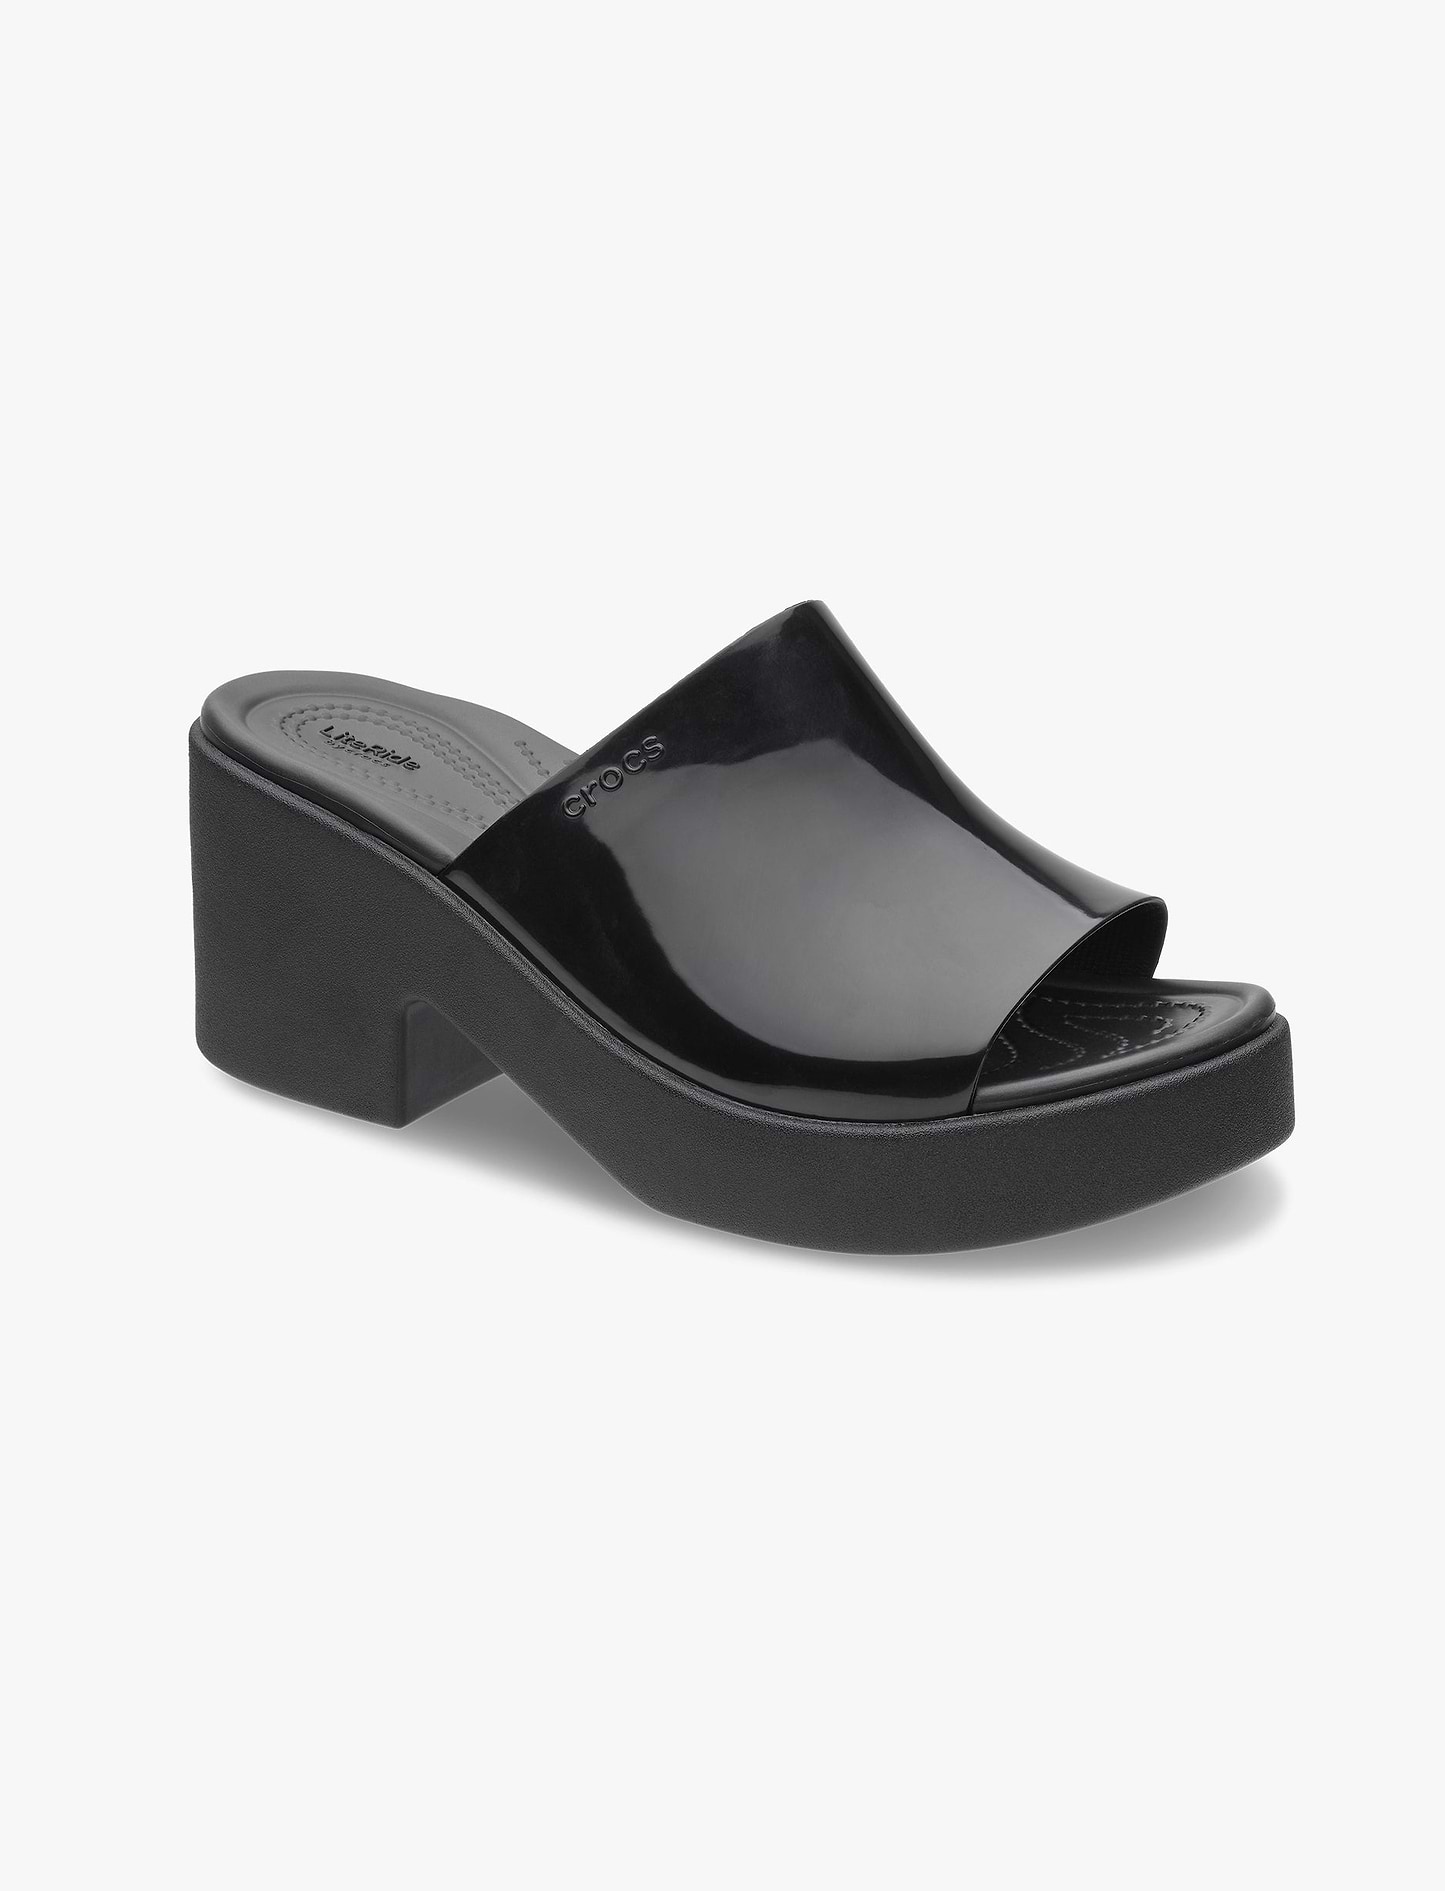 Crocs Brooklyn Slide High Shine Heel - כפכפי עקב קרוקס לנשים בצבע שחור